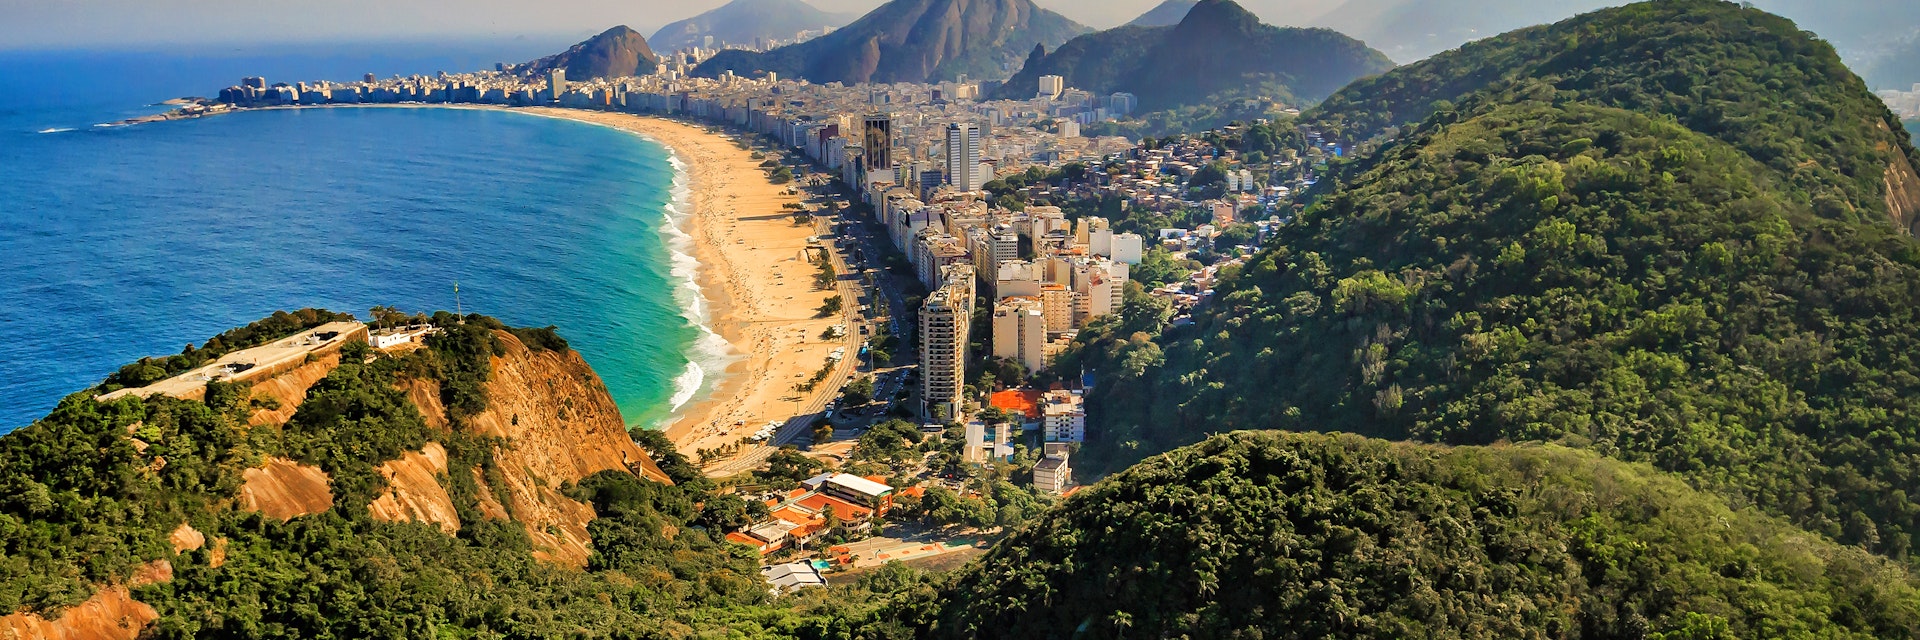 Aerial view of famous Copacabana Beach and Ipanema beach in Rio de Janeiro, Brazil
975466162
bird eye vew